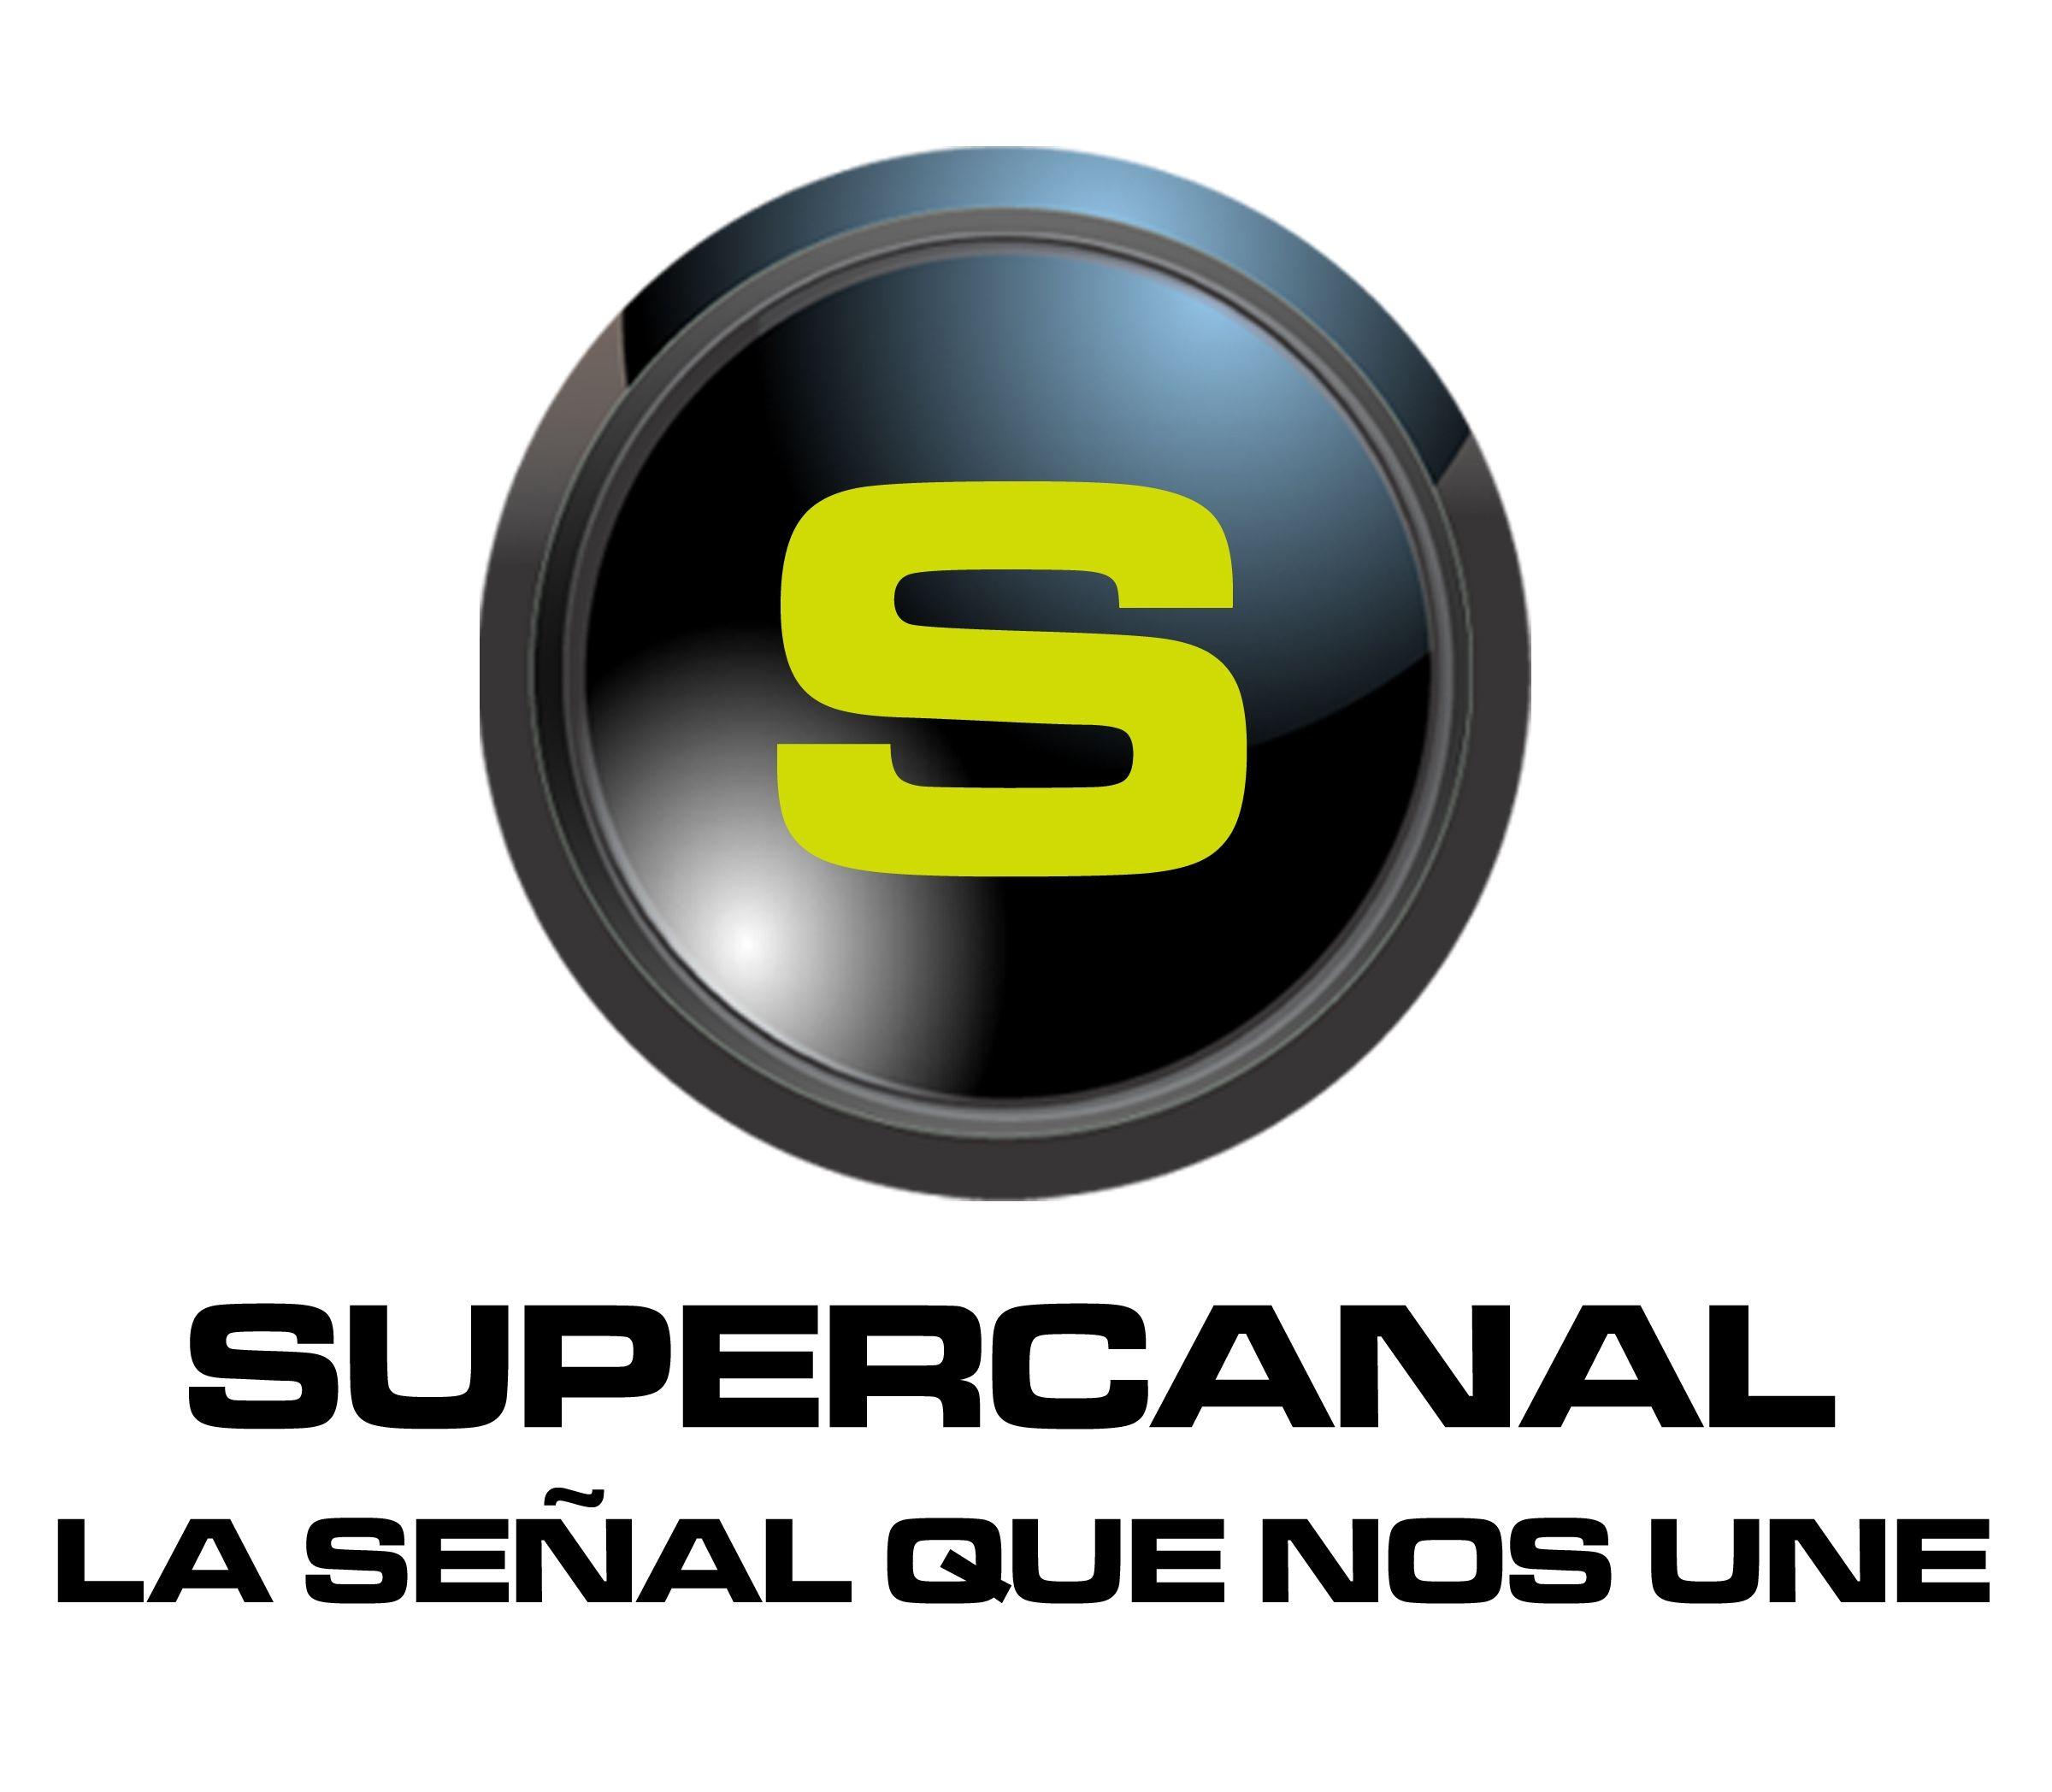 BHRG Logo - Super Canal - Album on Imgur